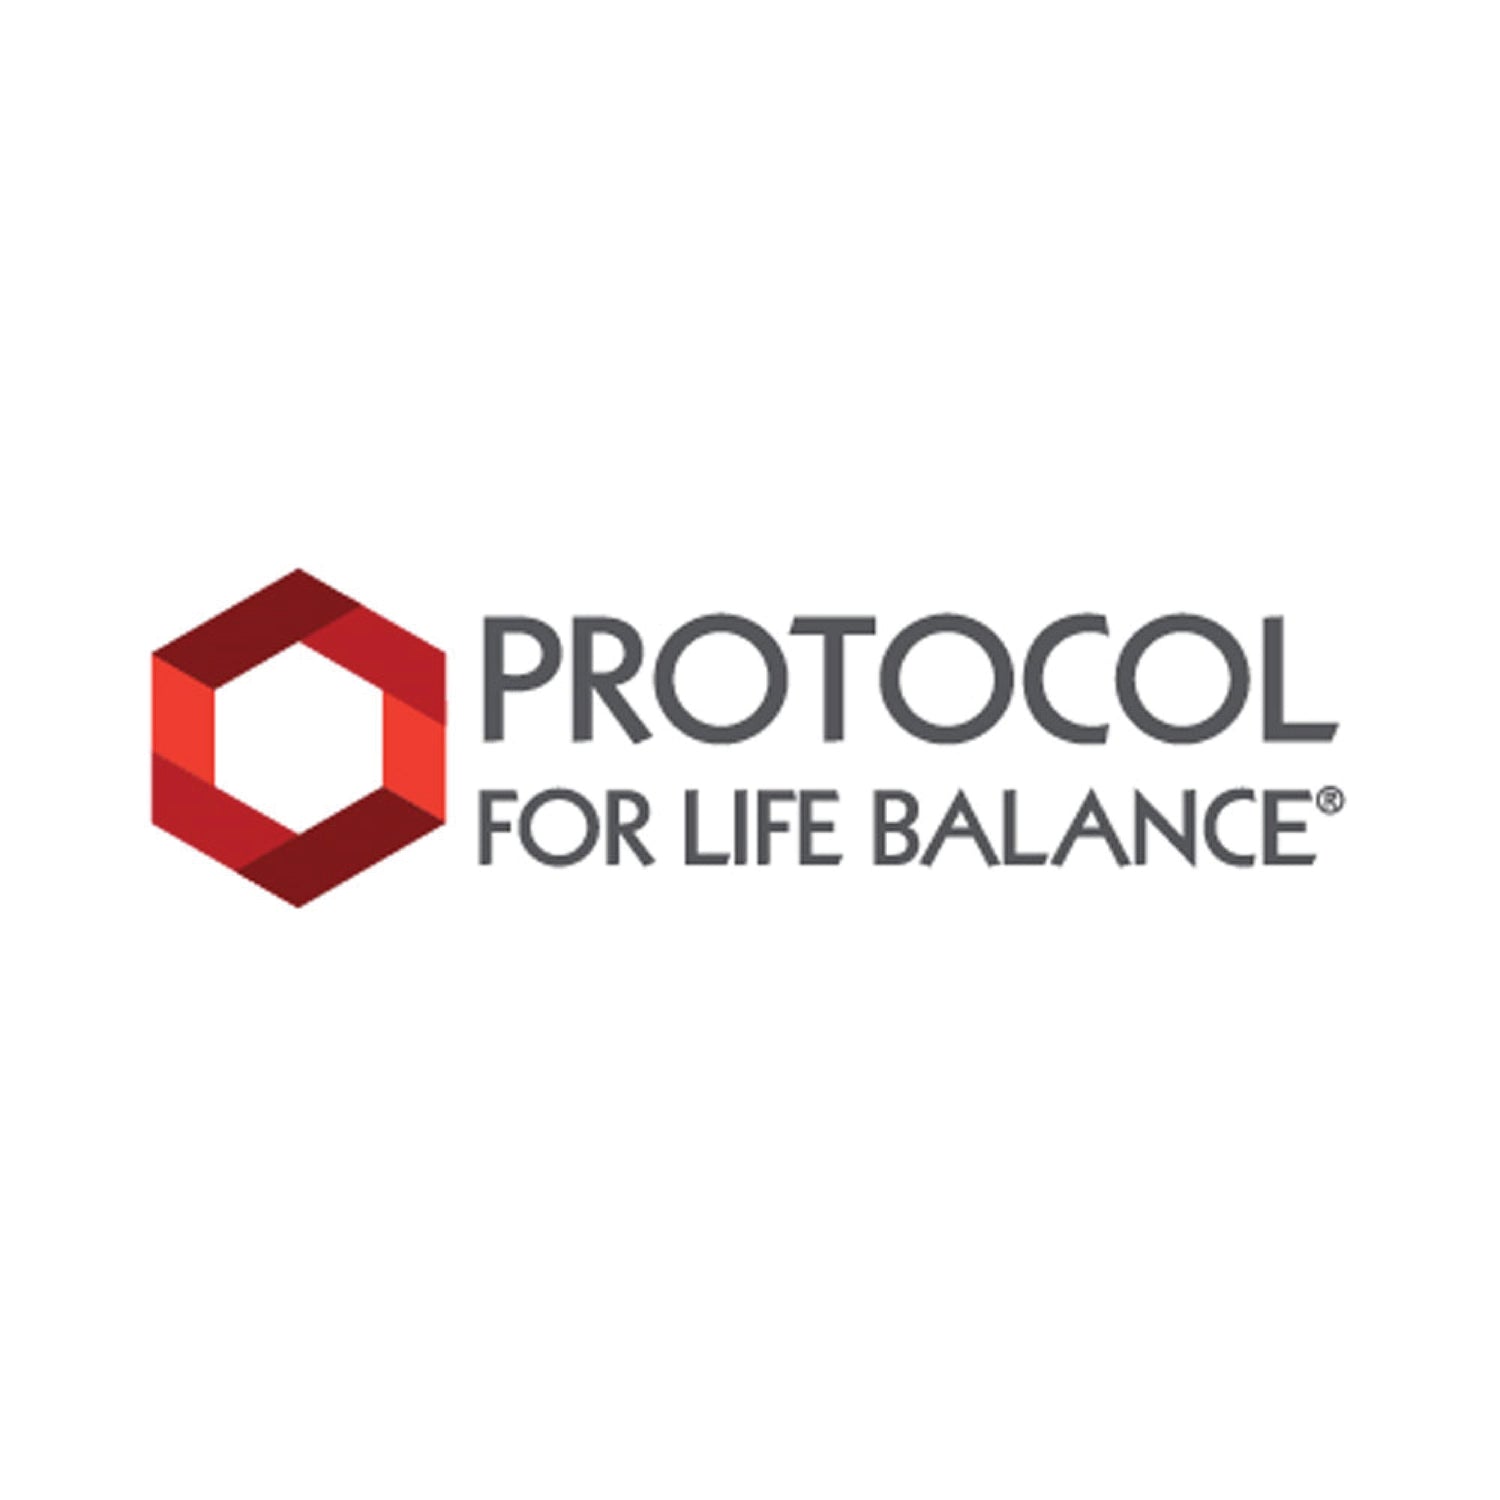 Protocol for Life Balance, Pure MCT Oil, 16 fl. oz. (473 mL) - Bloom Concept